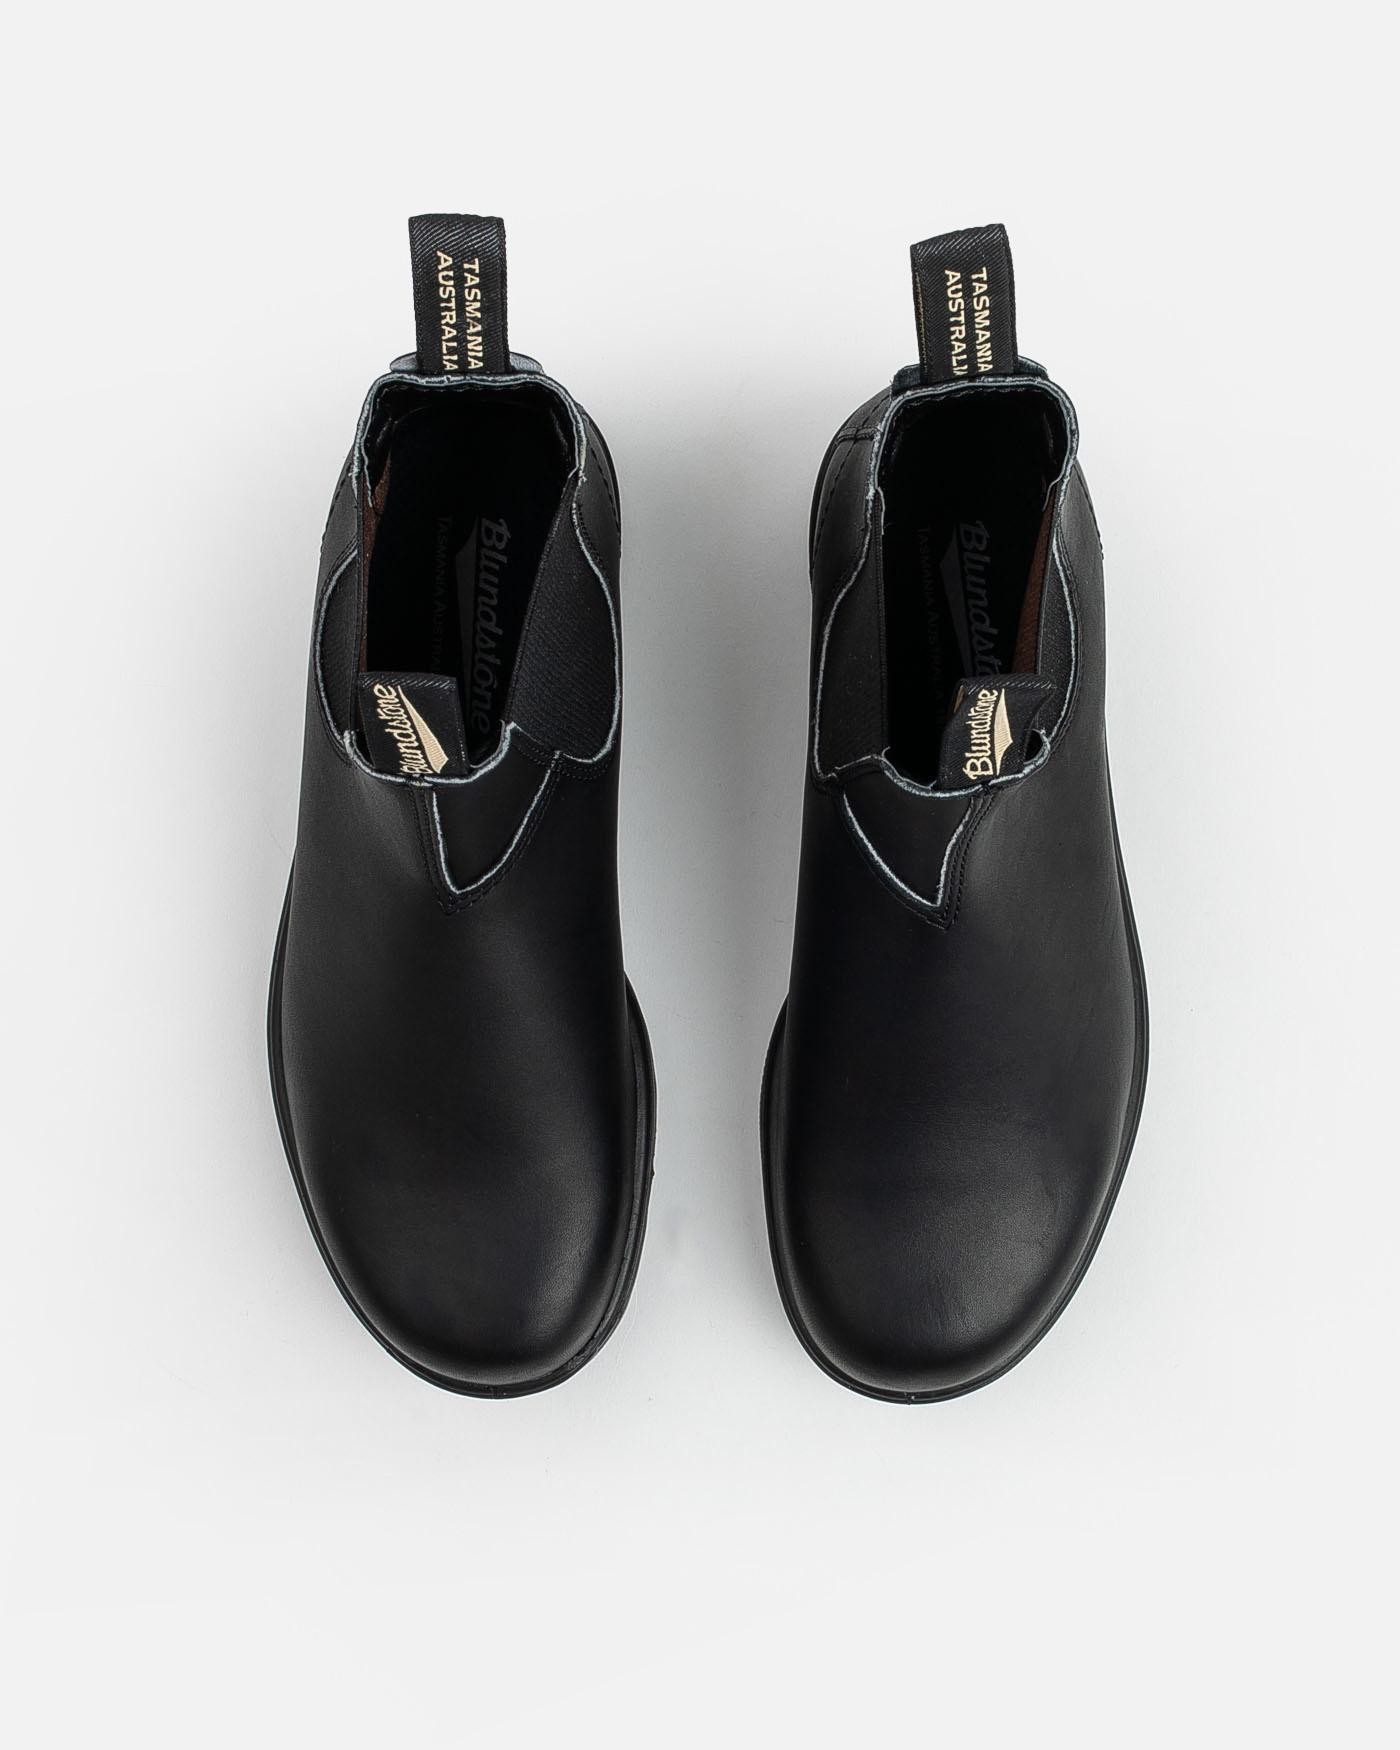 blundstone-botas-chelsea-classic-500-boots-black-negras-8